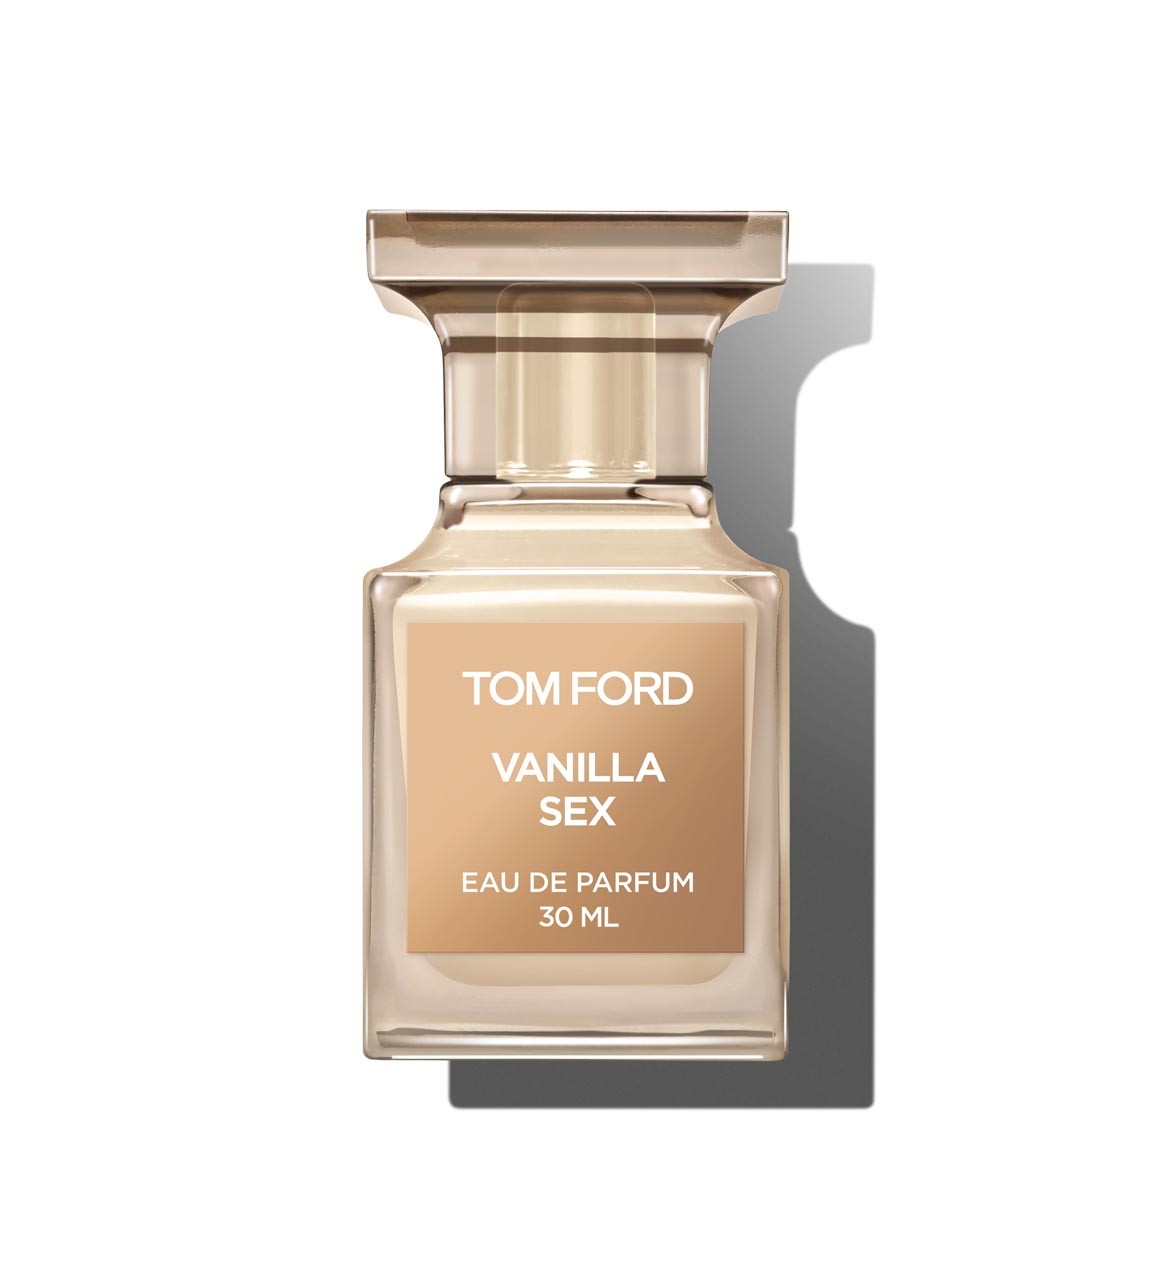 Tom Ford Vanilla Sex Eau De Parfum online